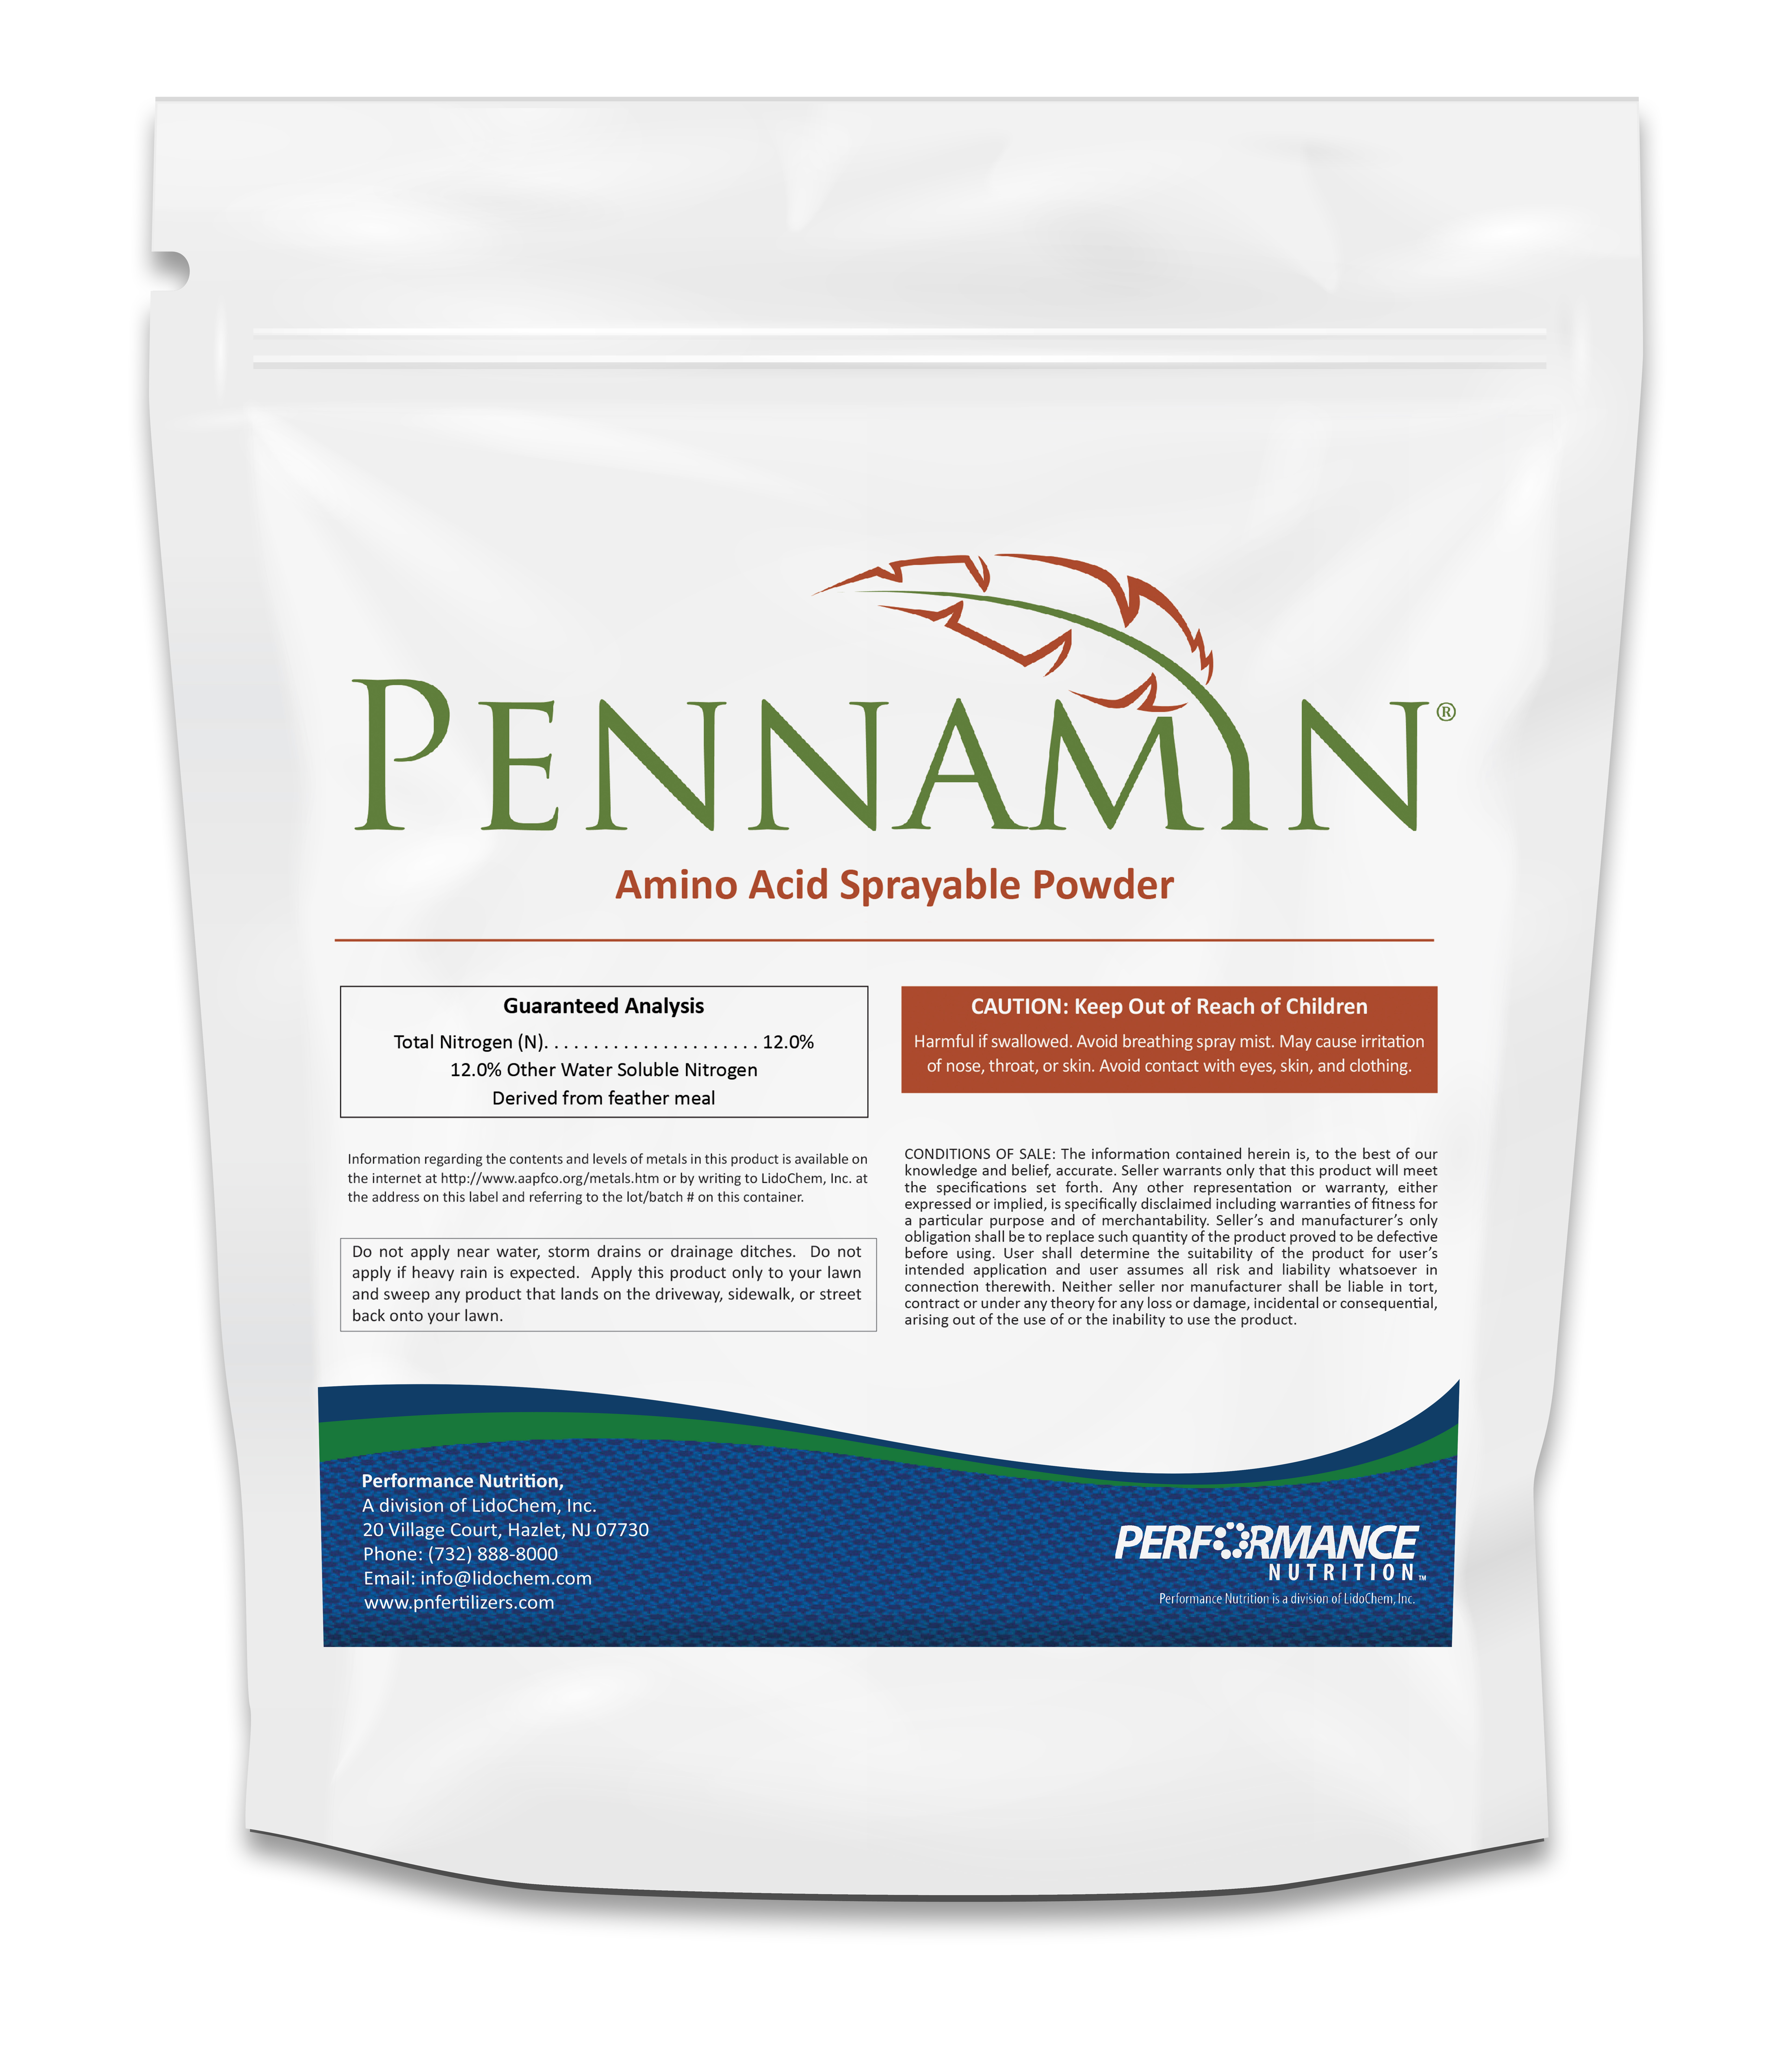 Pennamin Amino Acids Sprayable Powder Pouch